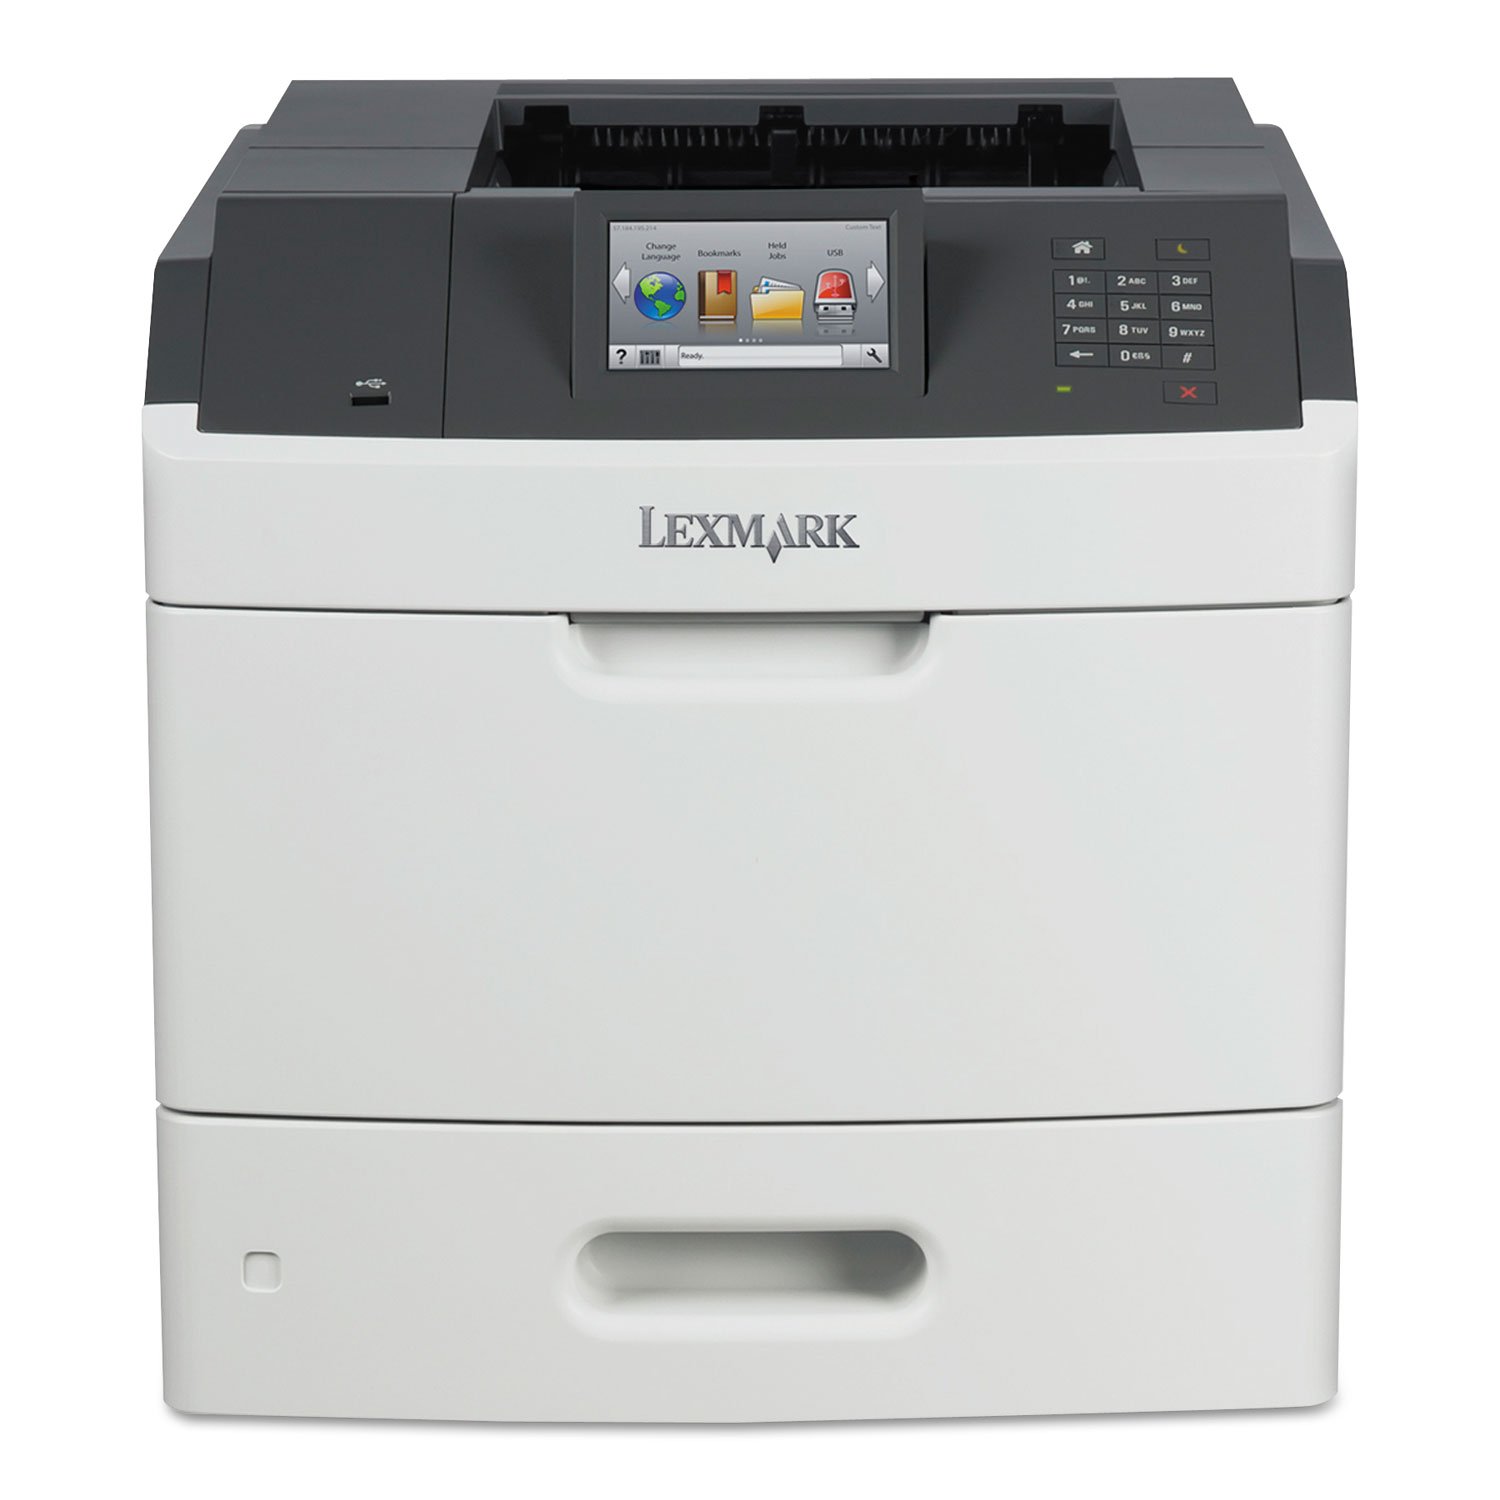 MS817n Monochrome Laser Printer